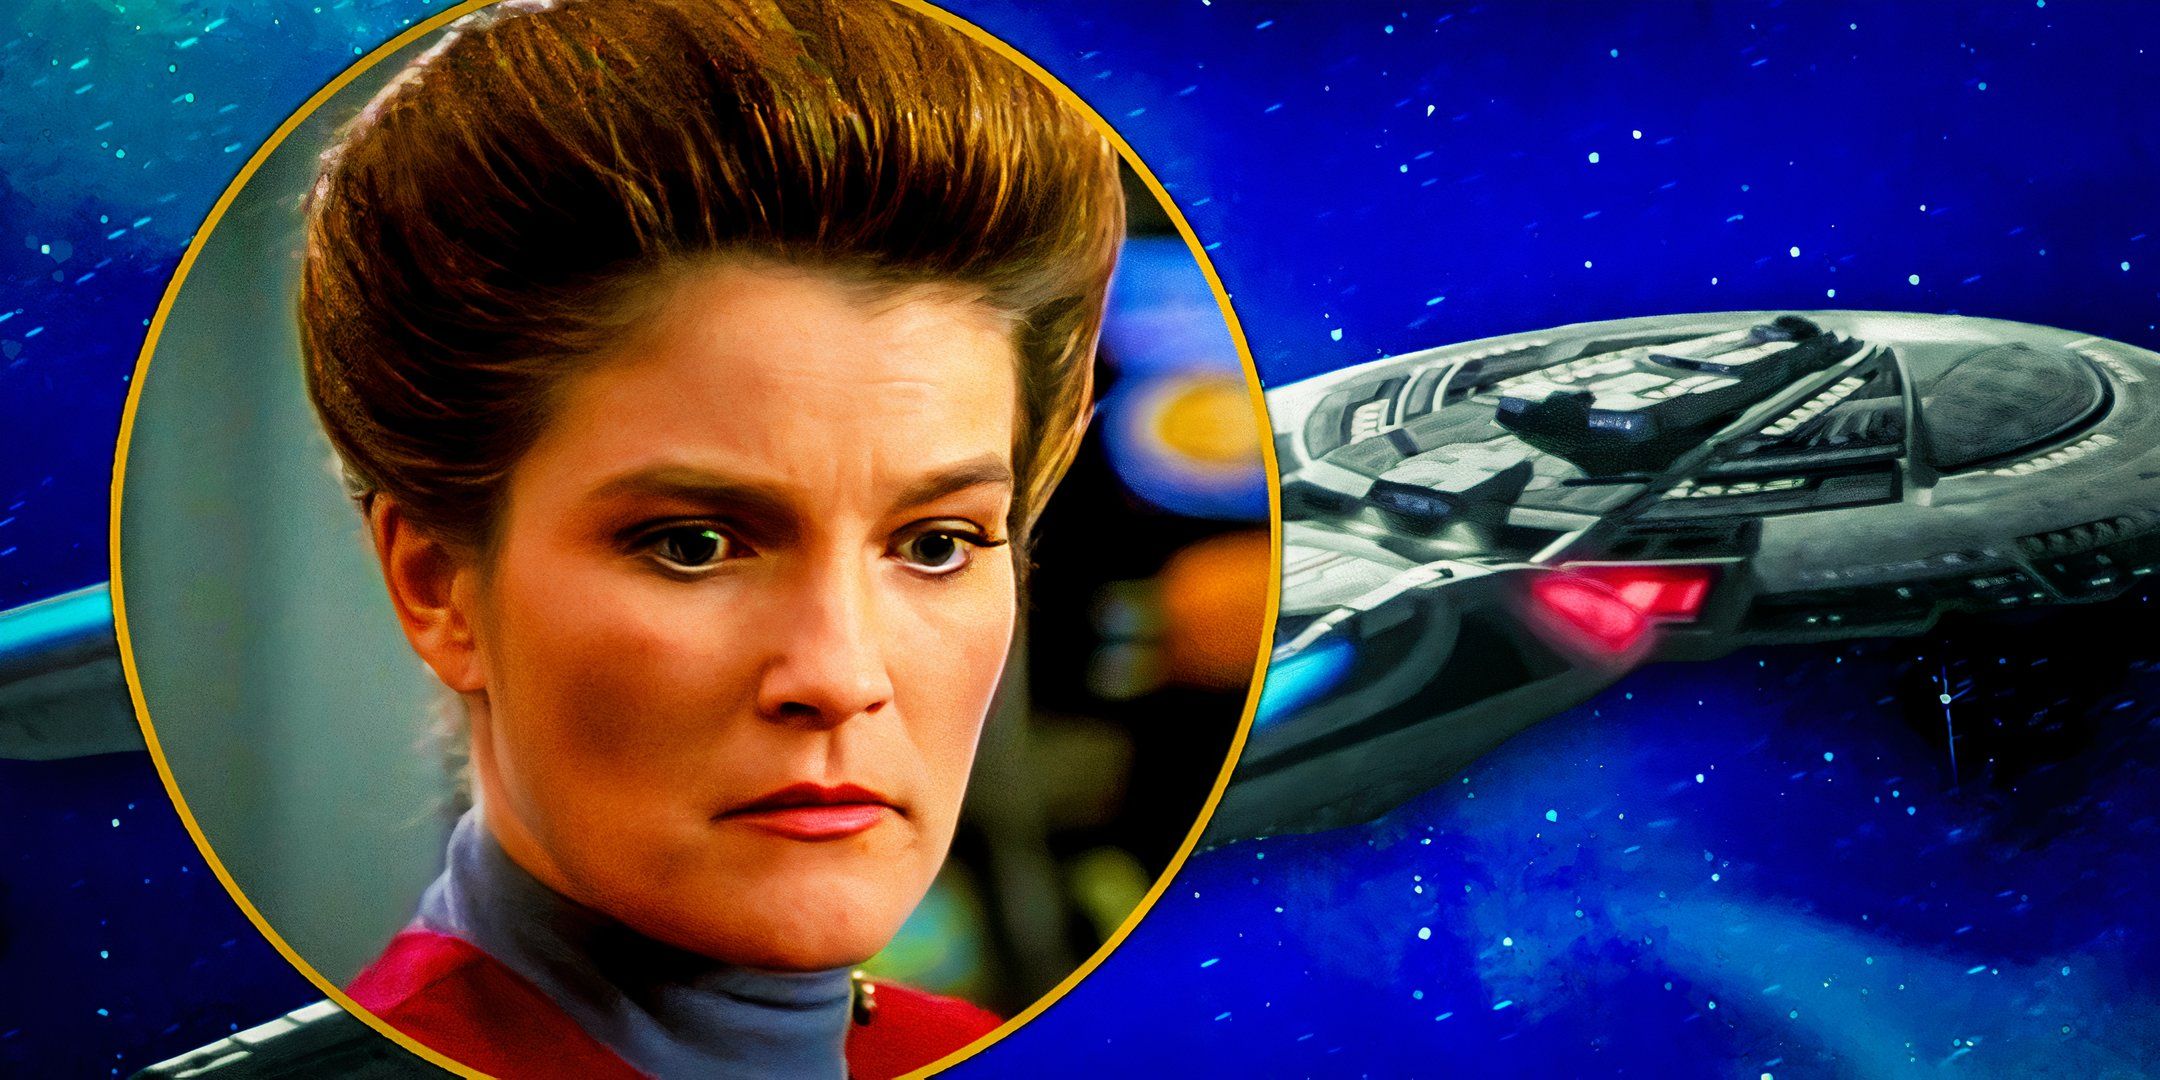 Captain Janeway and the USS Enterprise-E in Star Trek